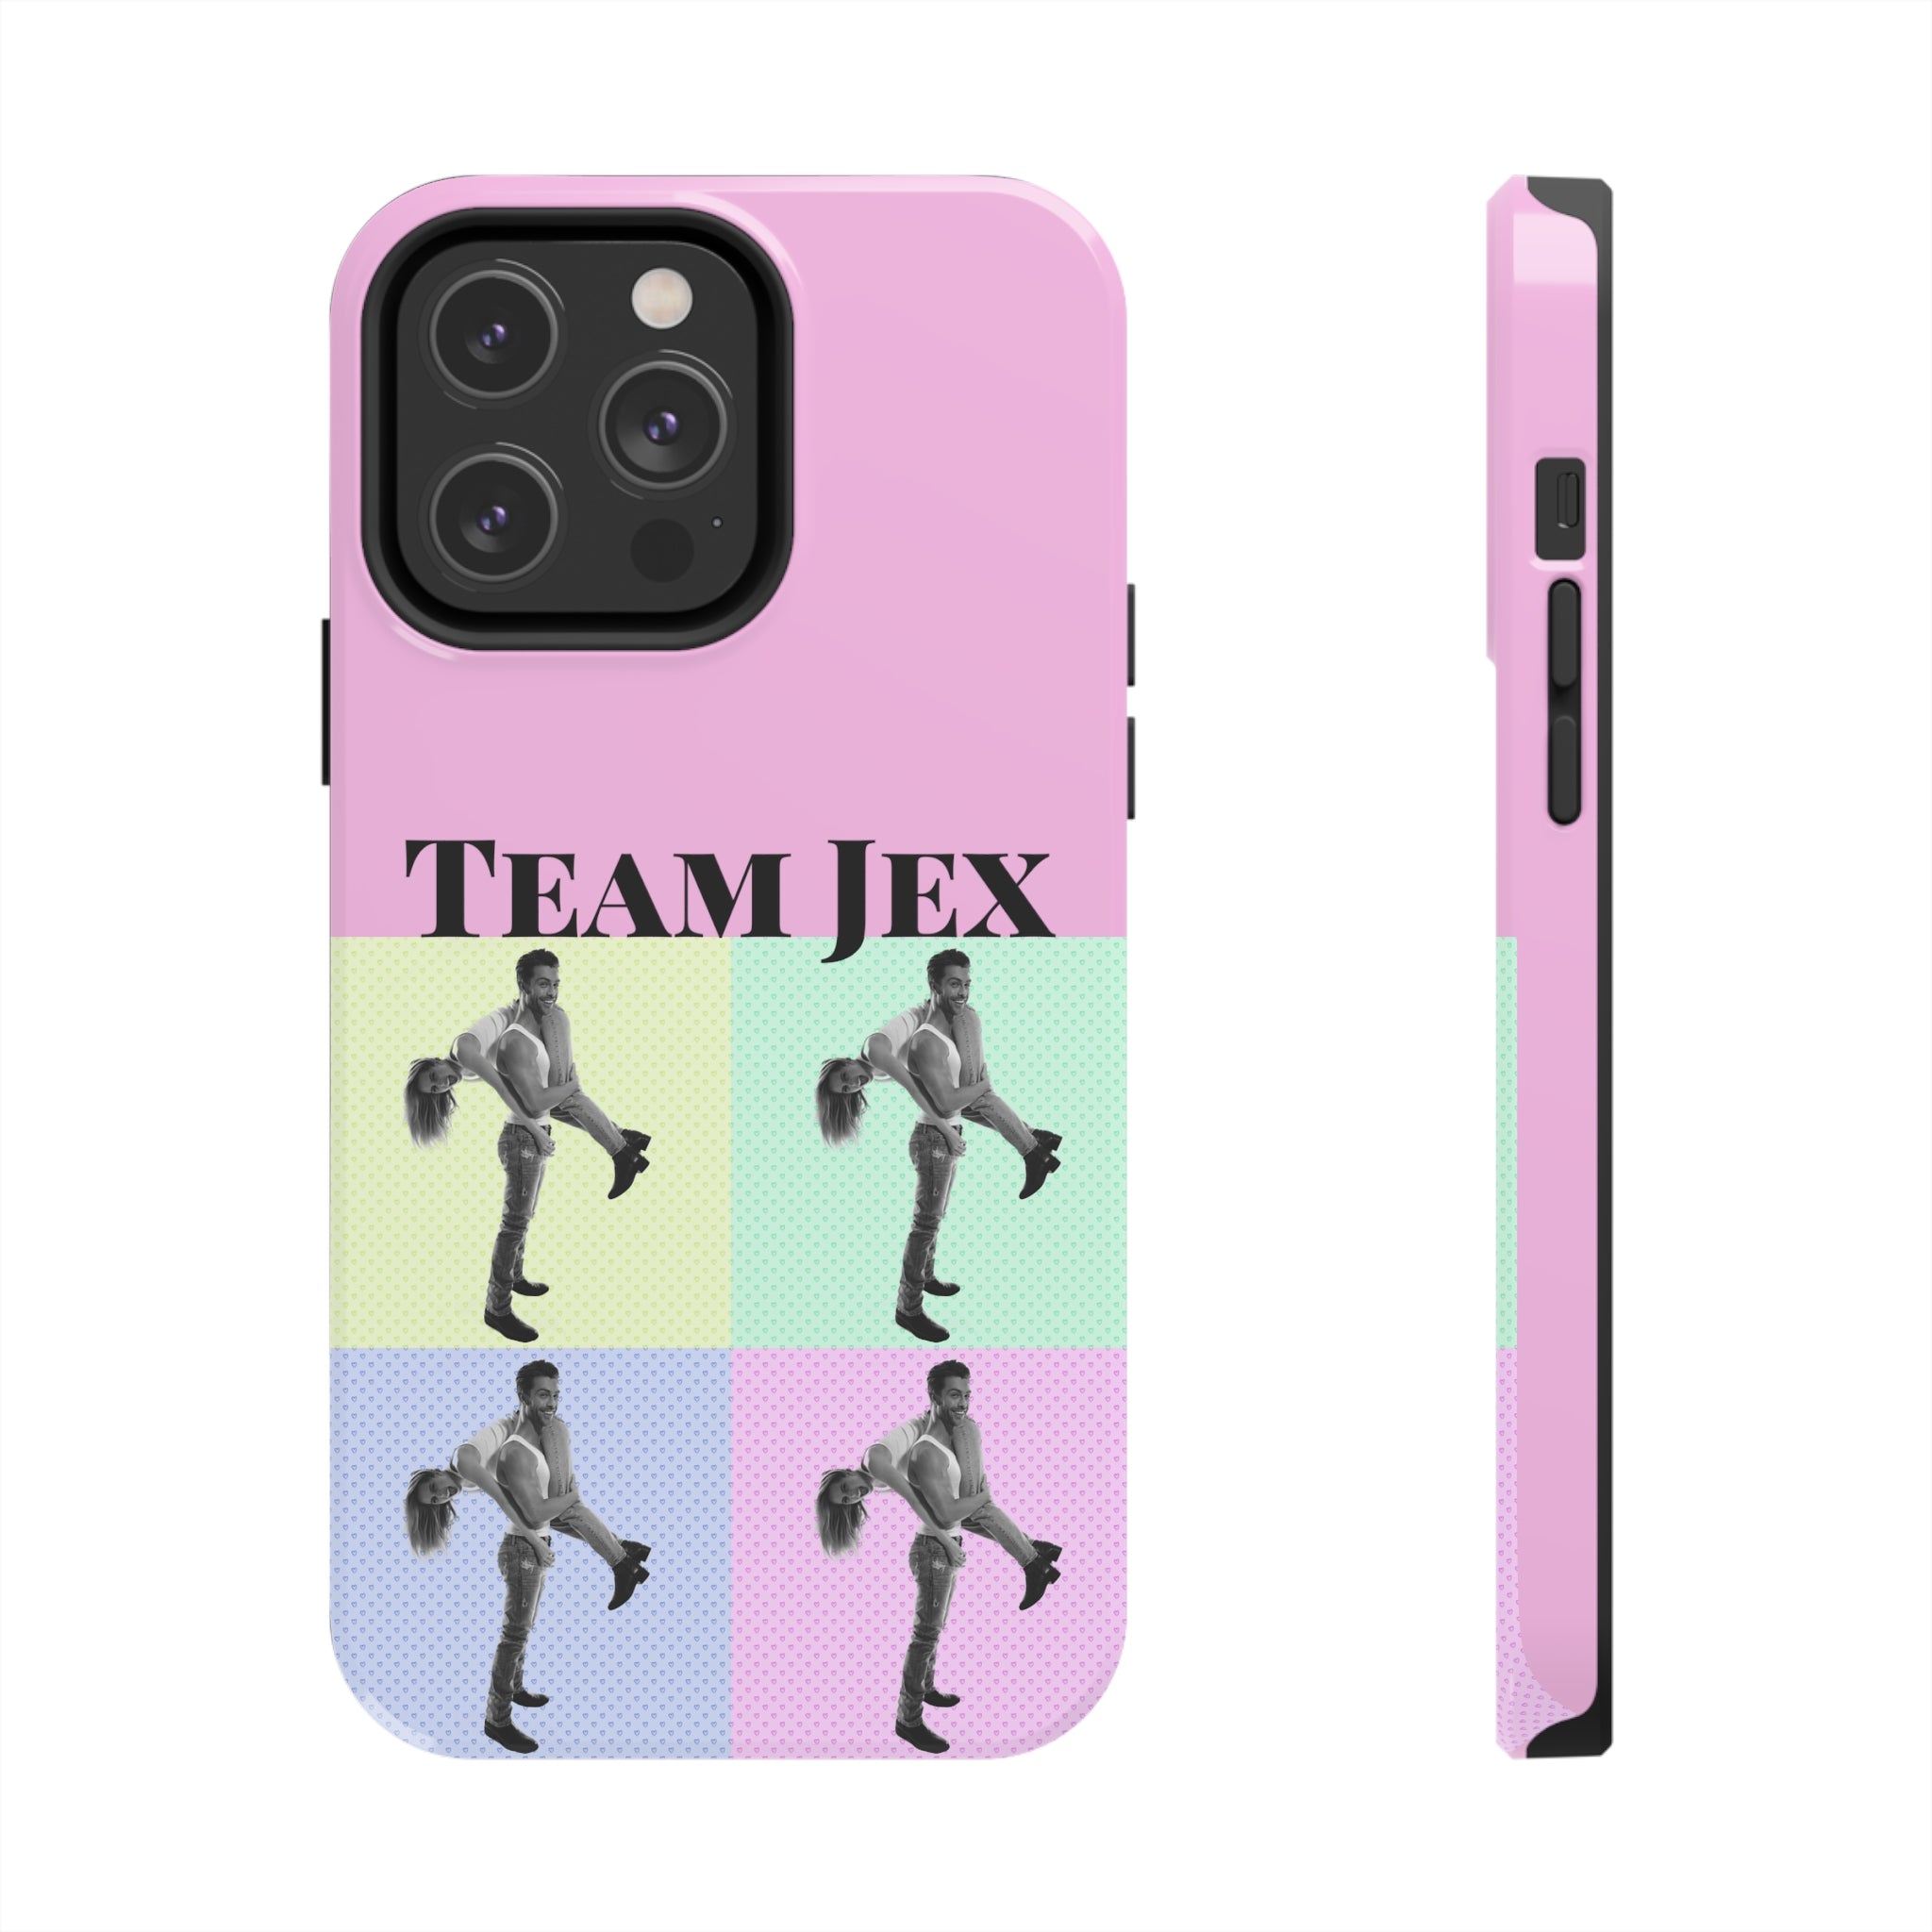 Team Jex General Hospital Tough Phone Cases